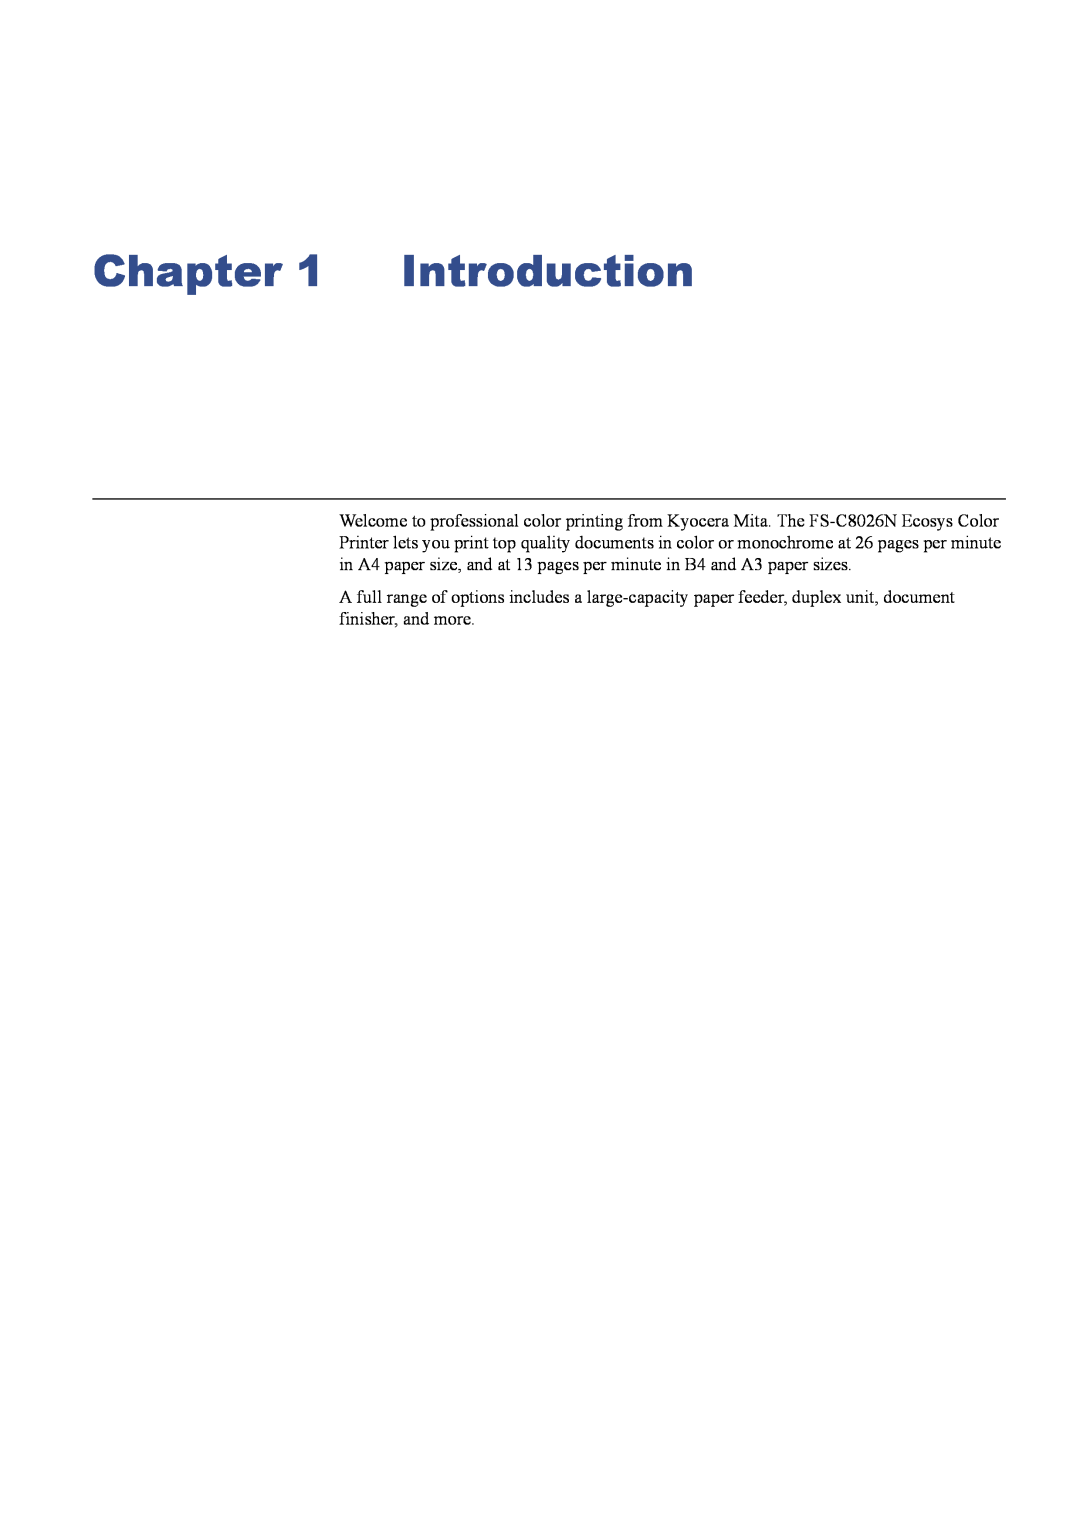 Kyocera C8026N manual Introduction 